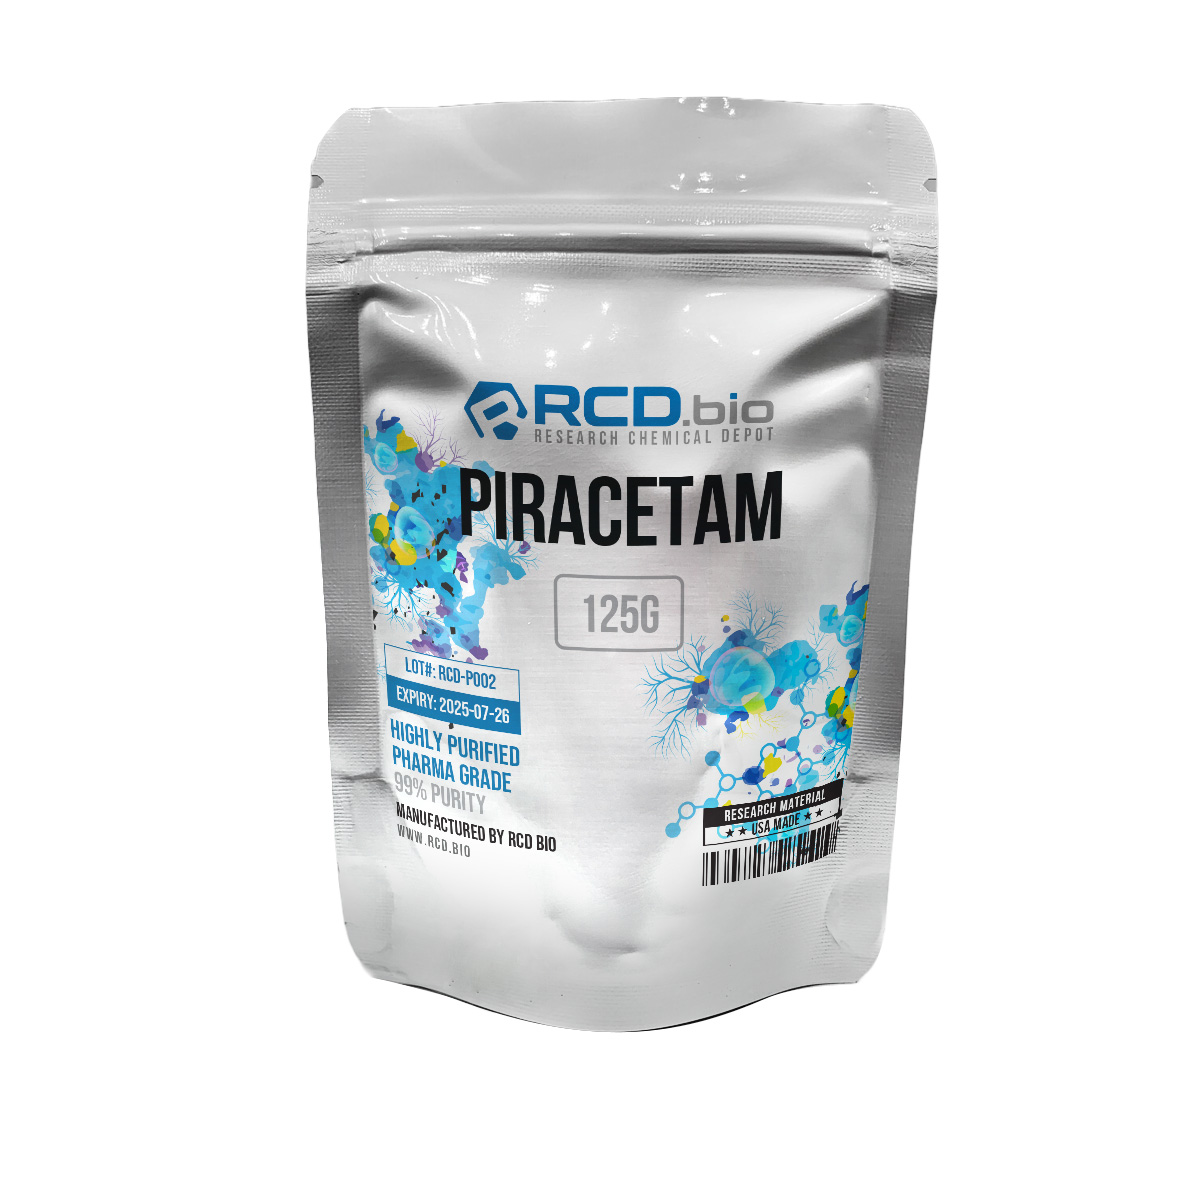 Piracetam Powder for Sale | Fast Shipping | RCD.bio